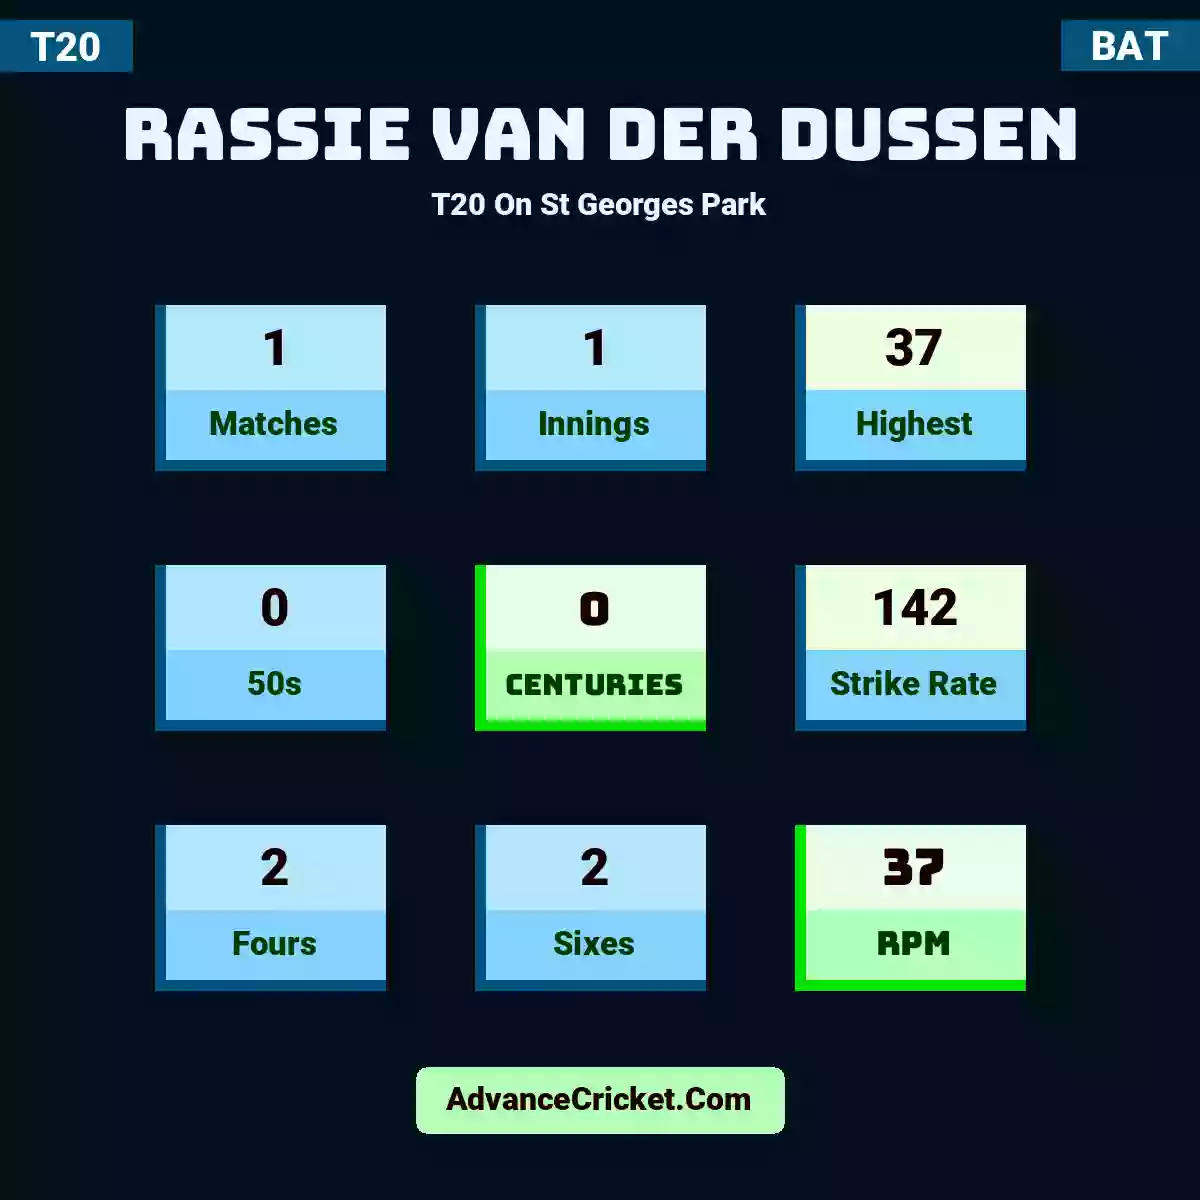 Rassie van der Dussen T20  On St Georges Park, Rassie van der Dussen played 1 matches, scored 37 runs as highest, 0 half-centuries, and 0 centuries, with a strike rate of 142. R.Dussen hit 2 fours and 2 sixes, with an RPM of 37.